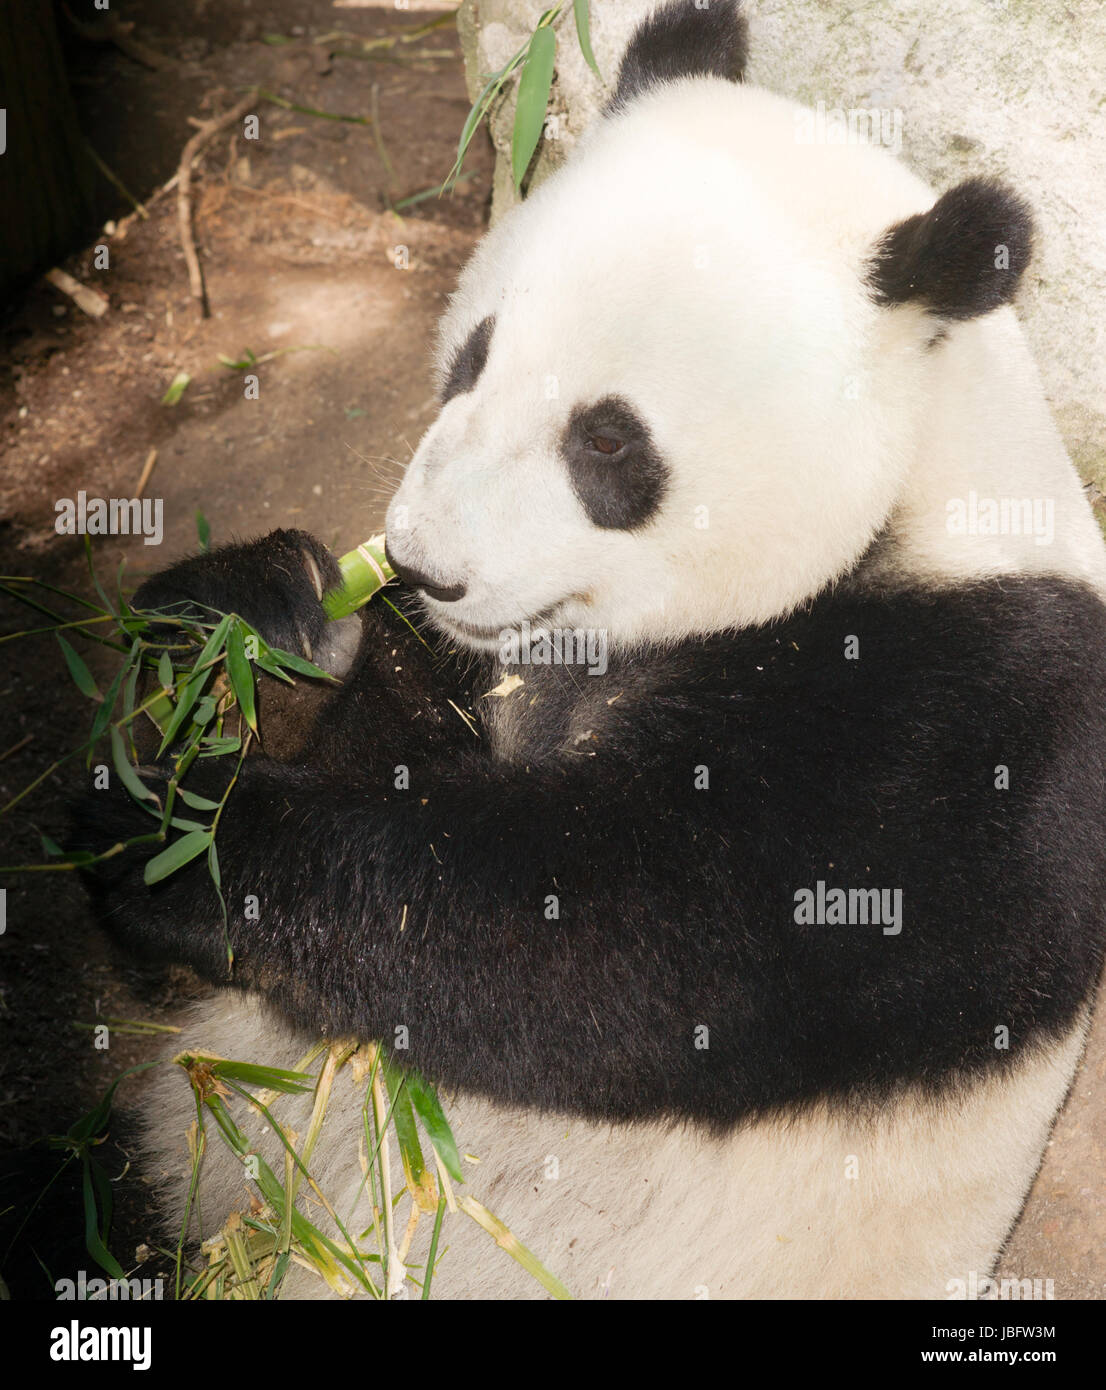 Endangered A Giant Panda relaxes while feeding on Bamboo Stock Photo